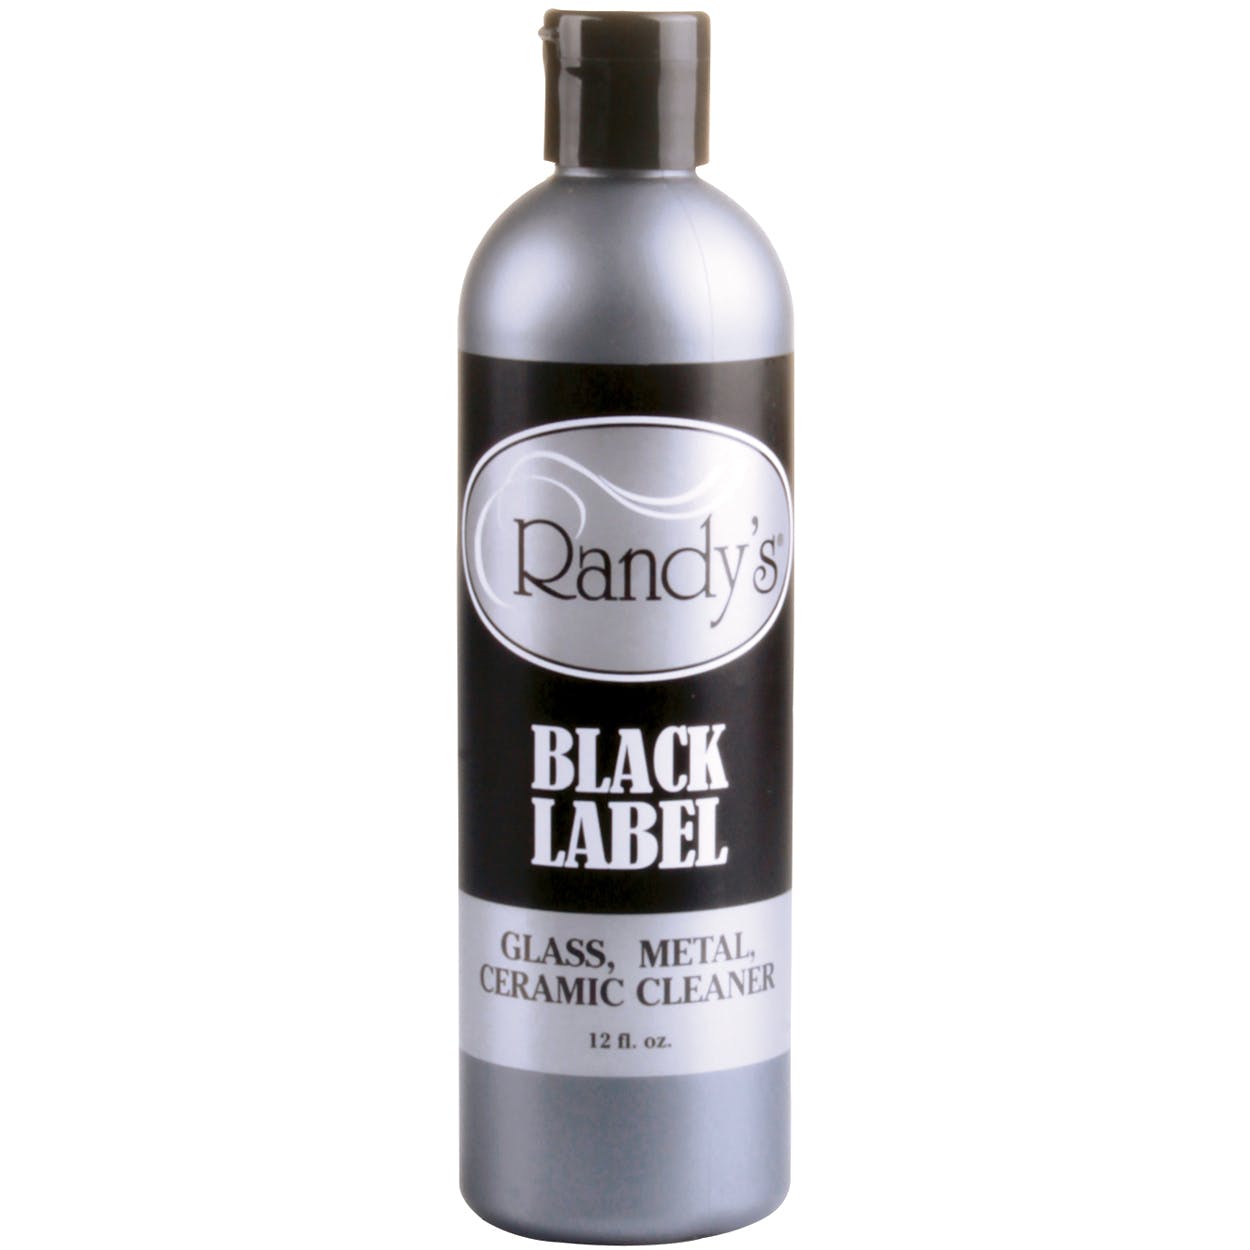 Randy's black label glass/metal cleaner